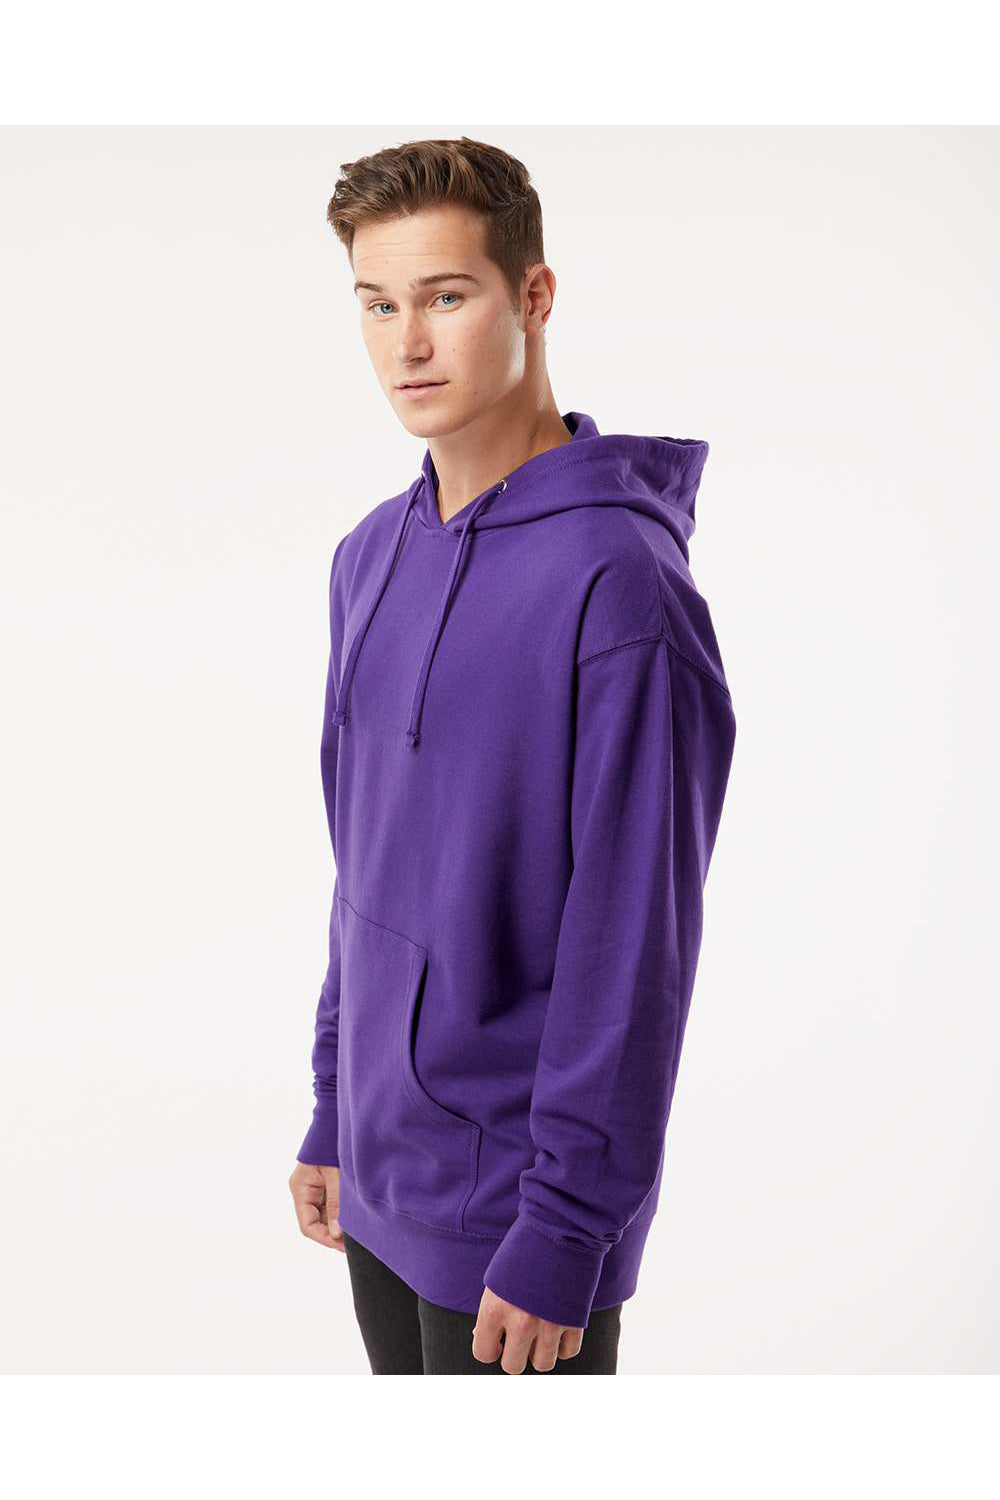 Independent Trading Co. SS4500 Mens Hooded Sweatshirt Hoodie Purple Model Side